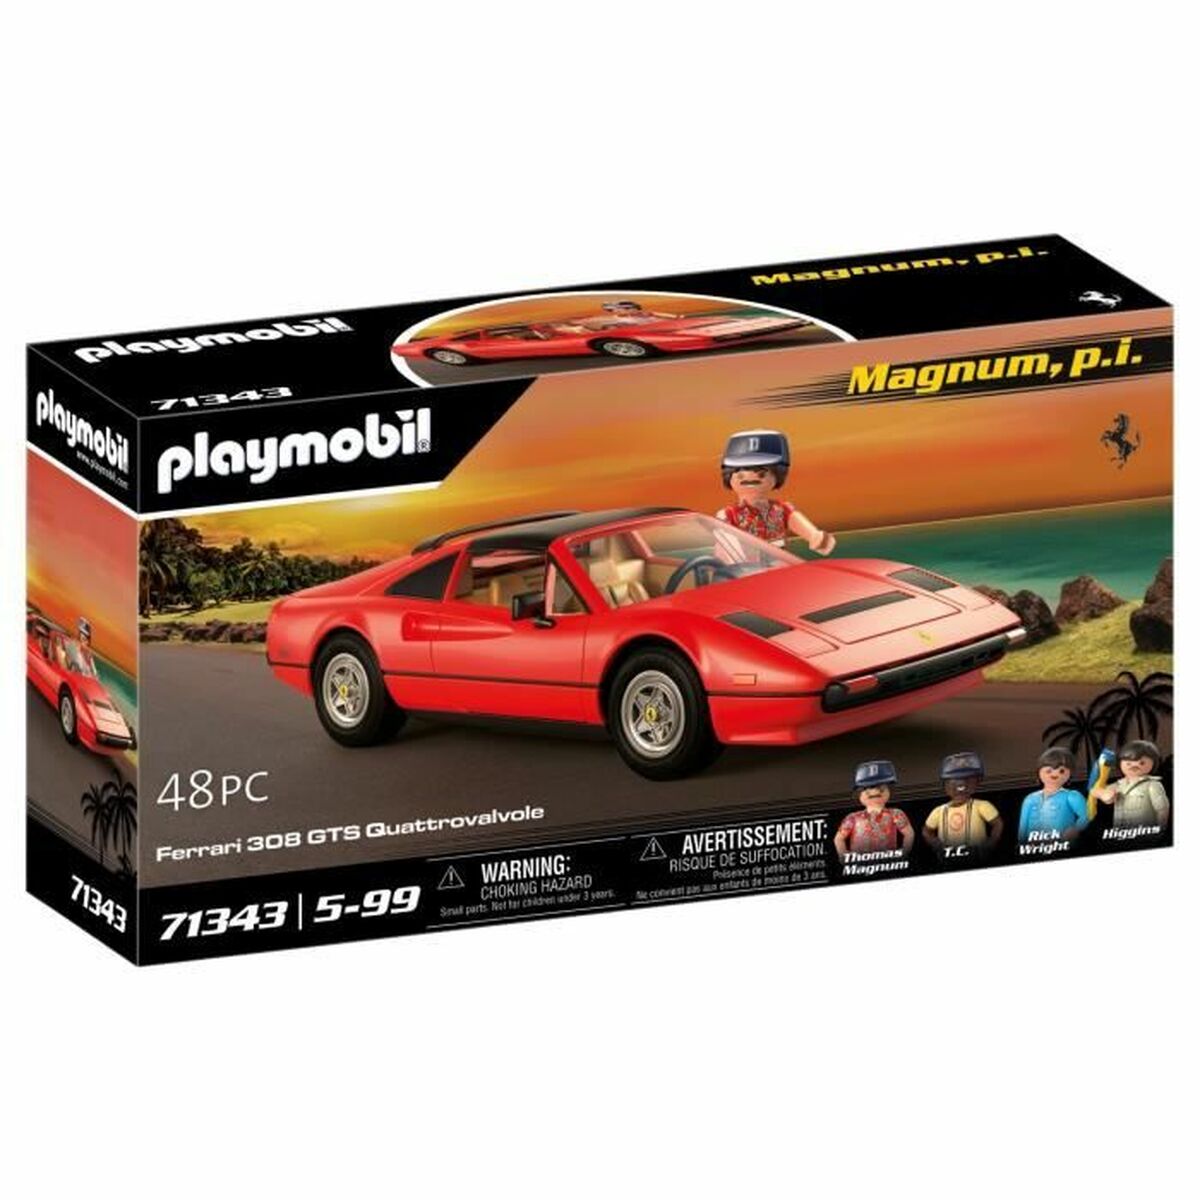 Véhicule Playmobil Magnum p.i